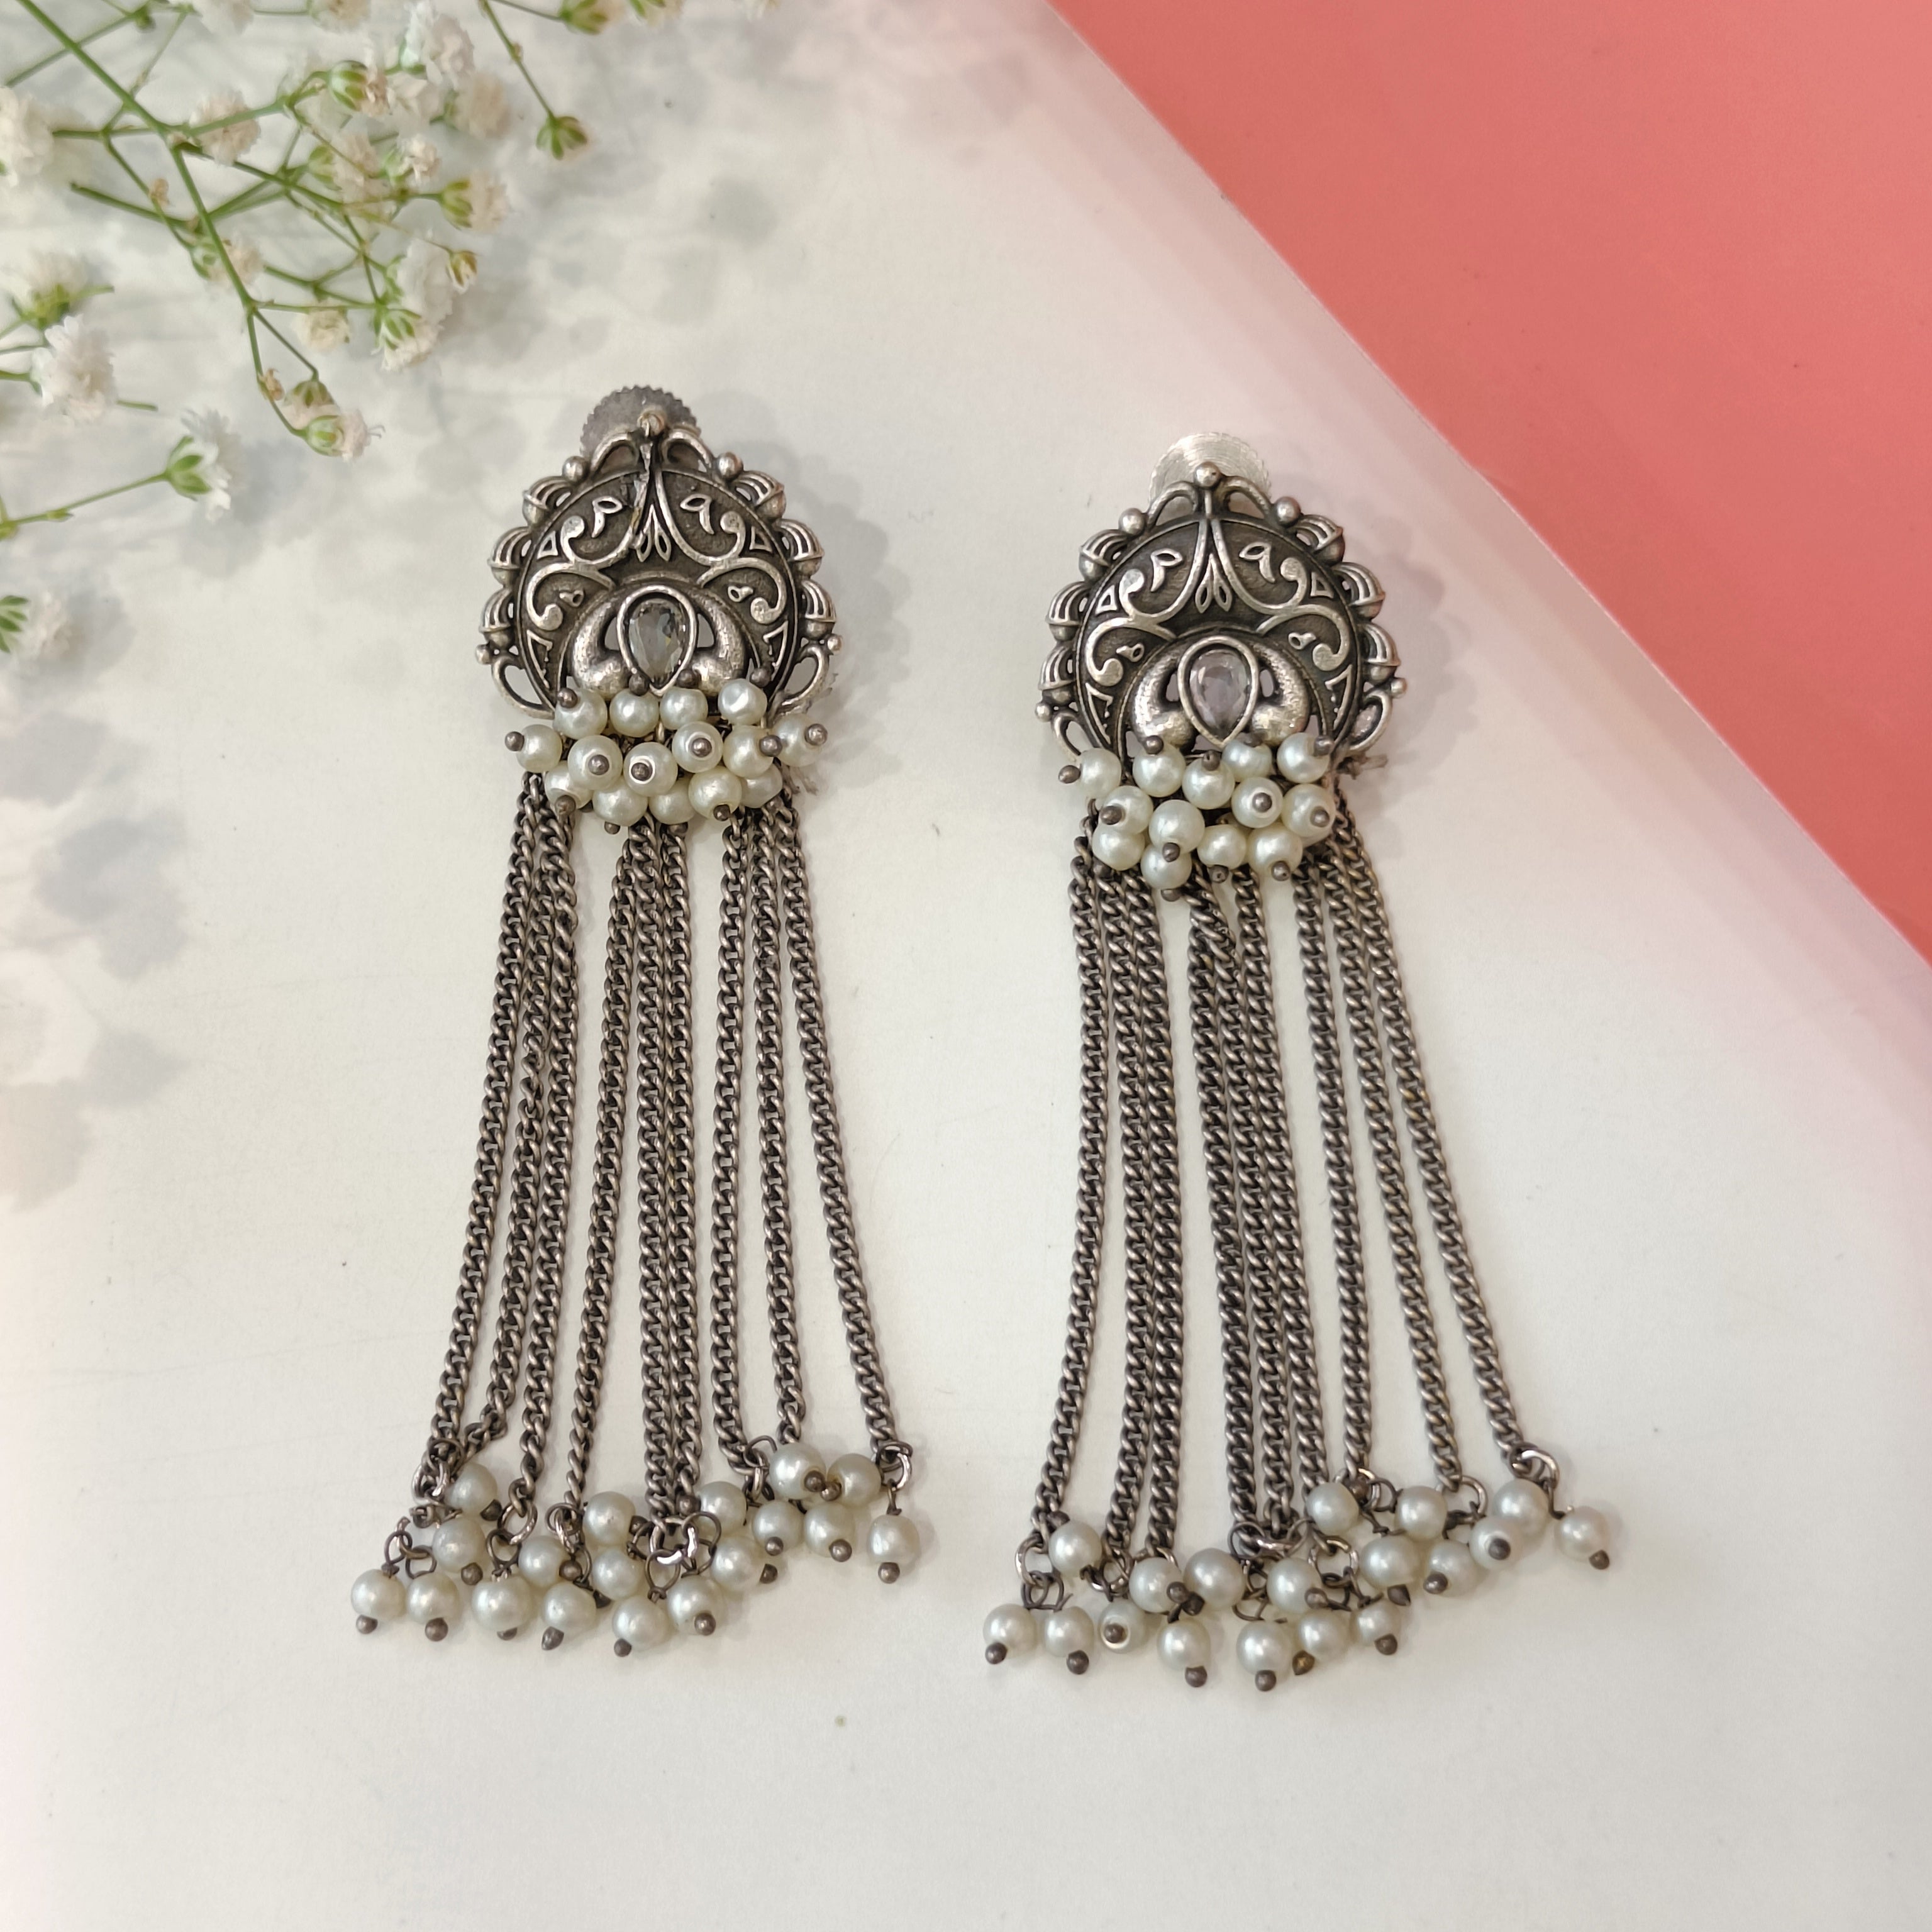 Inara Rea earrings